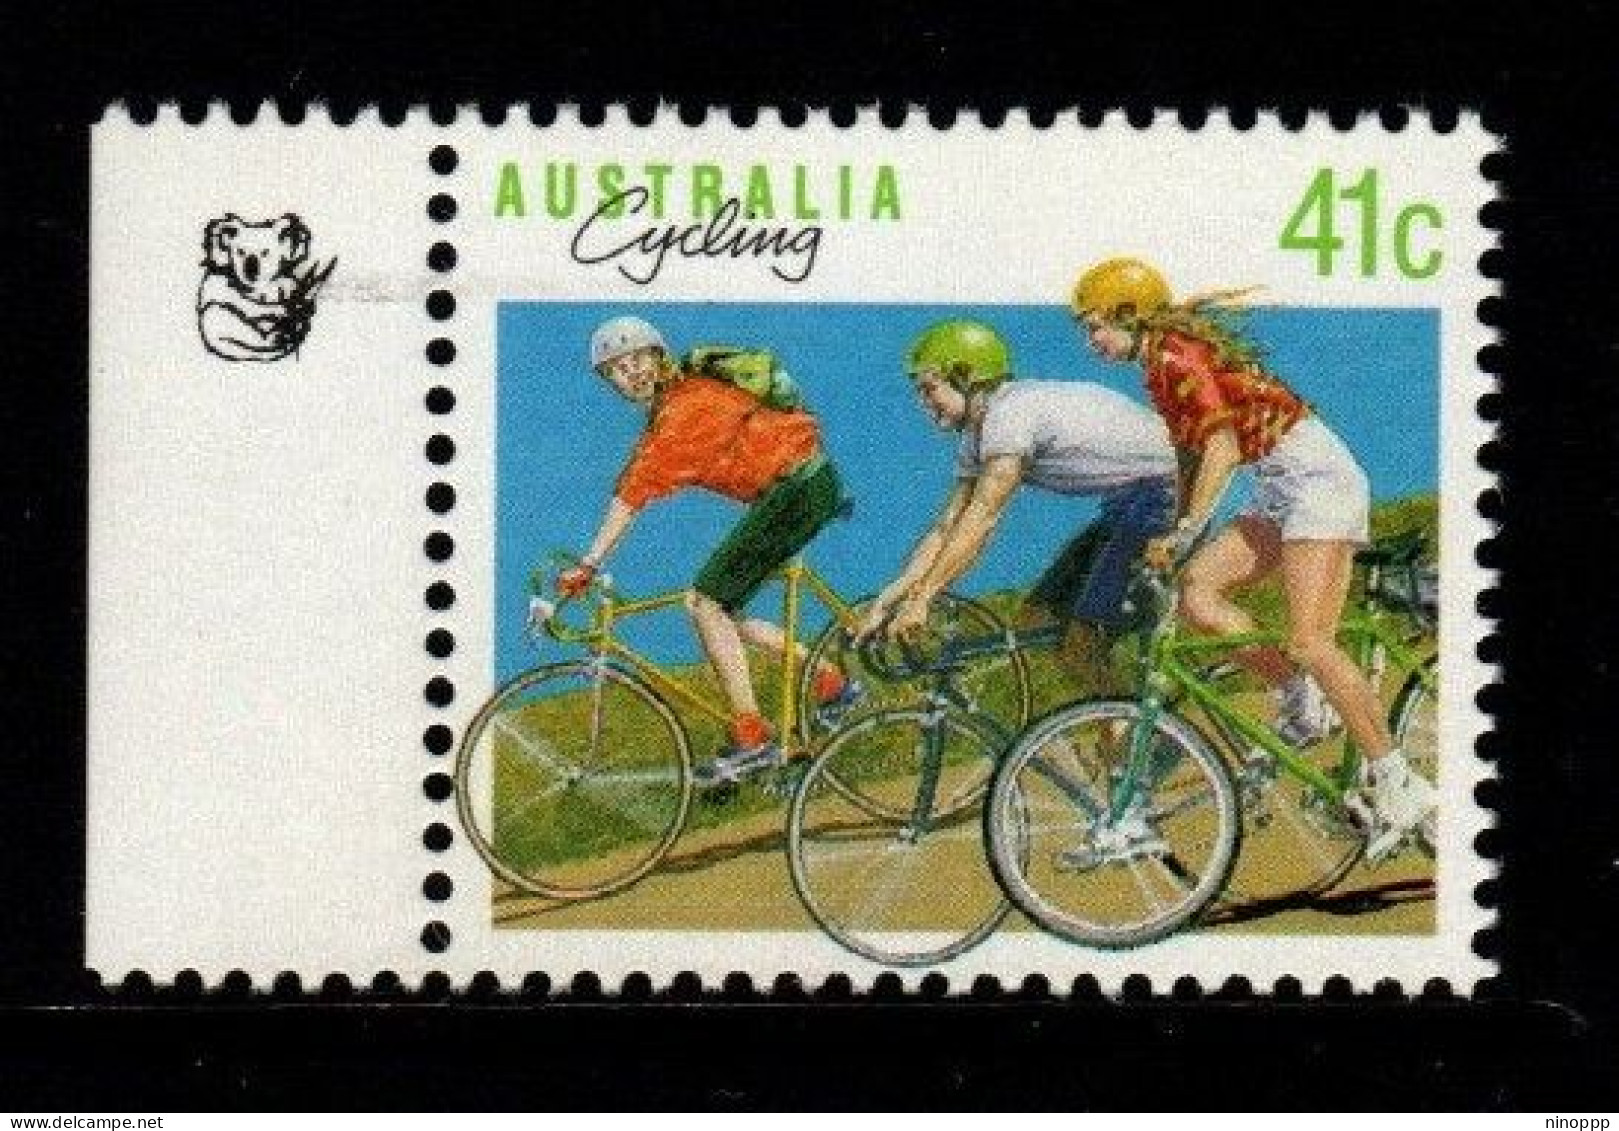 Australia Cat 1208b  Sports 41c Cycling, 1 Koalas Reprint,mint Never Hinged - Proofs & Reprints